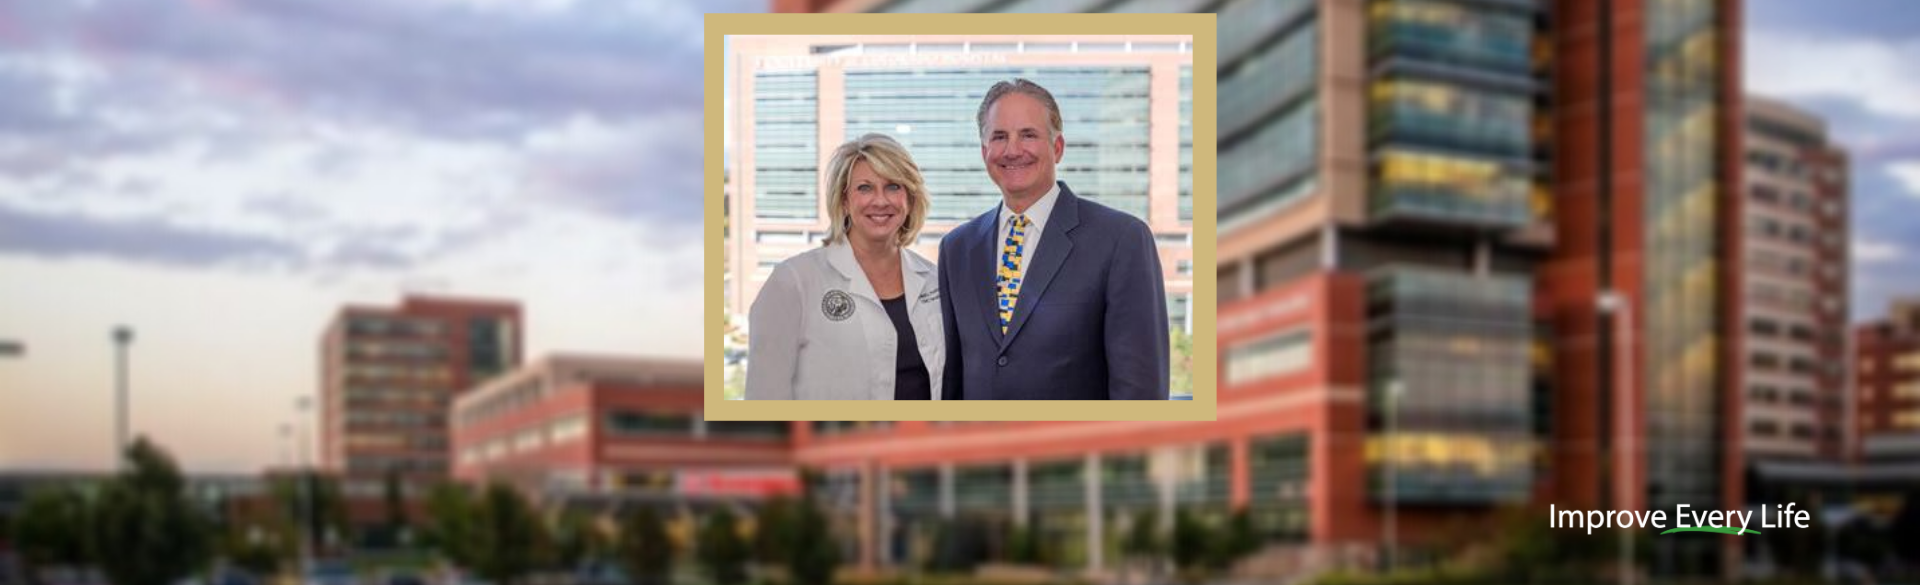 Drs. Pomfret and Pomposelli join Transplant team at University of Colorado Hospital.